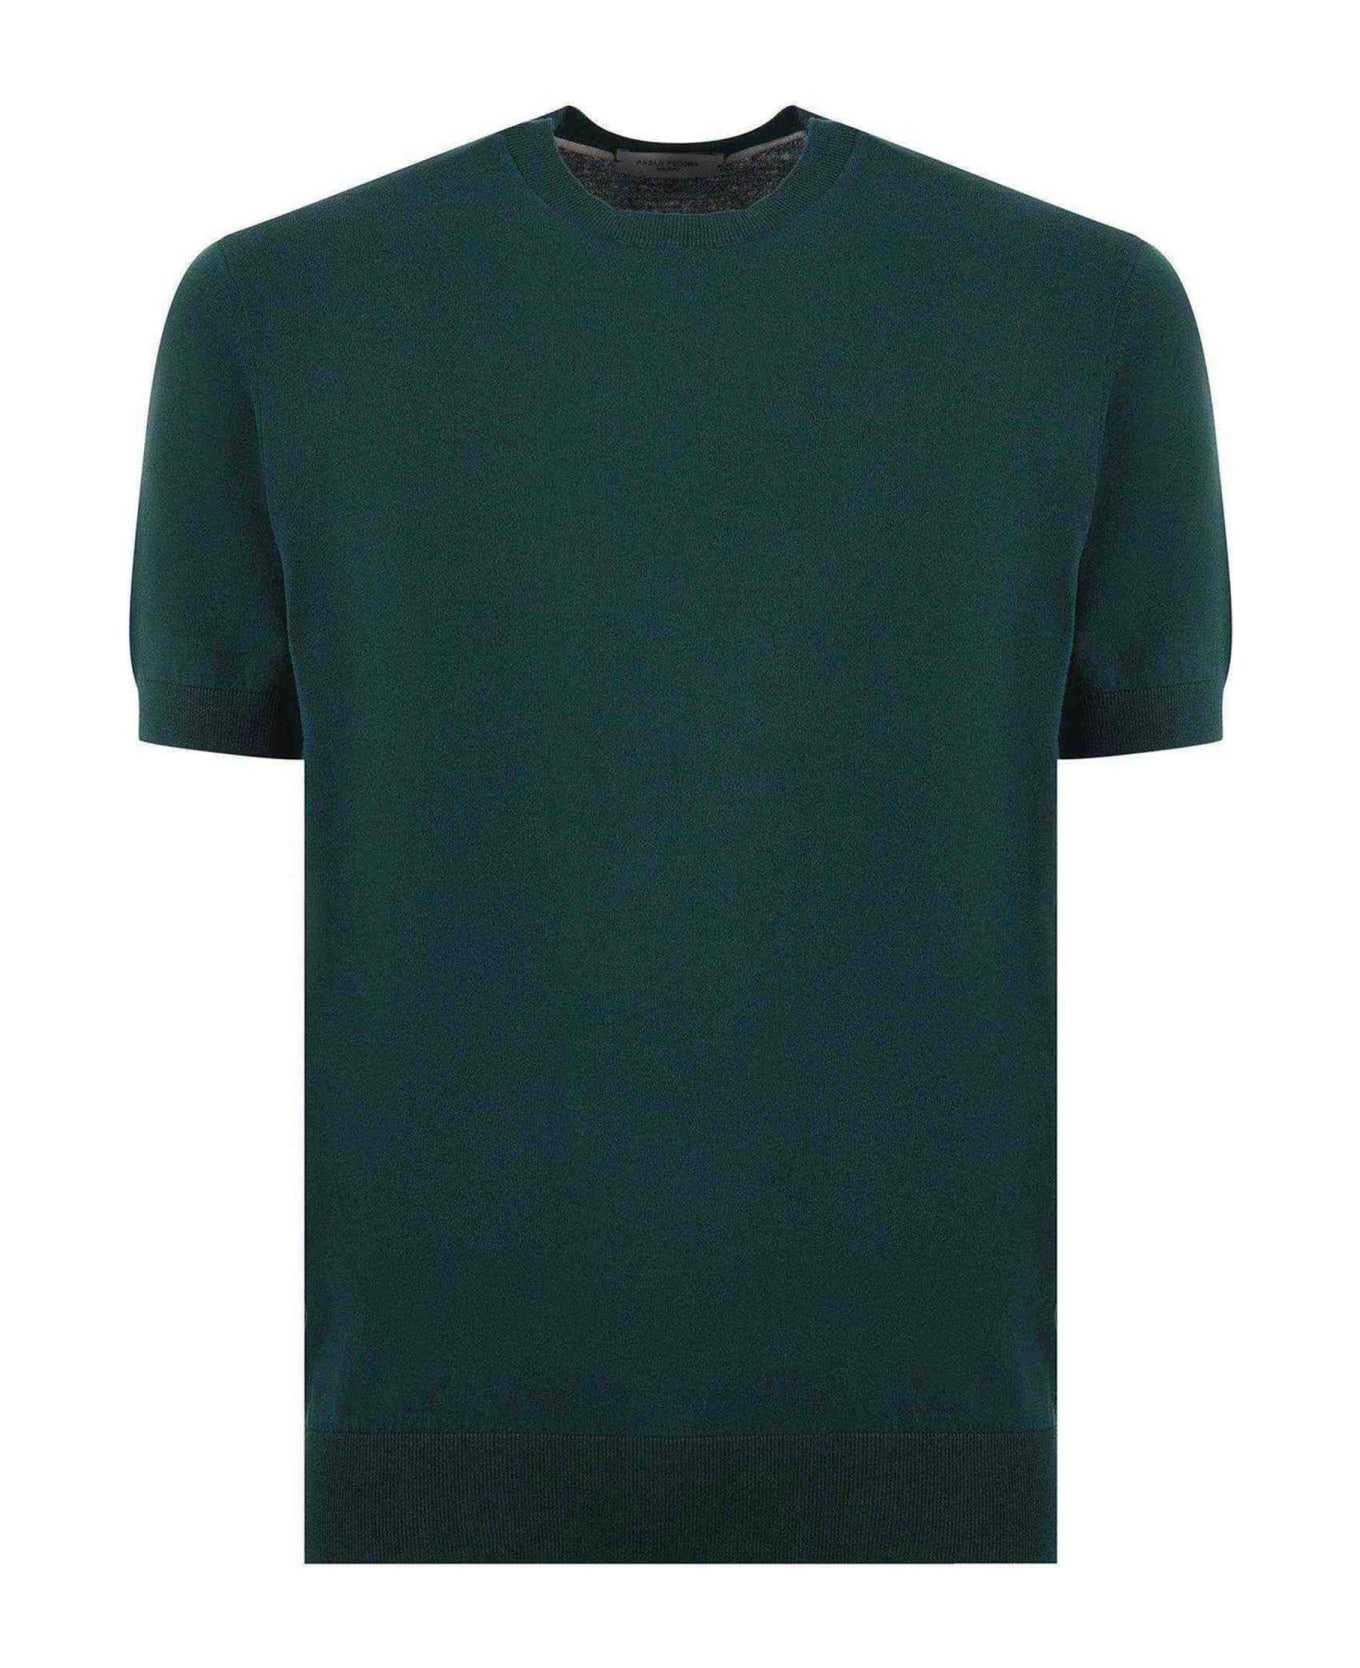 Paolo Pecora T-shirt - Verde inglese